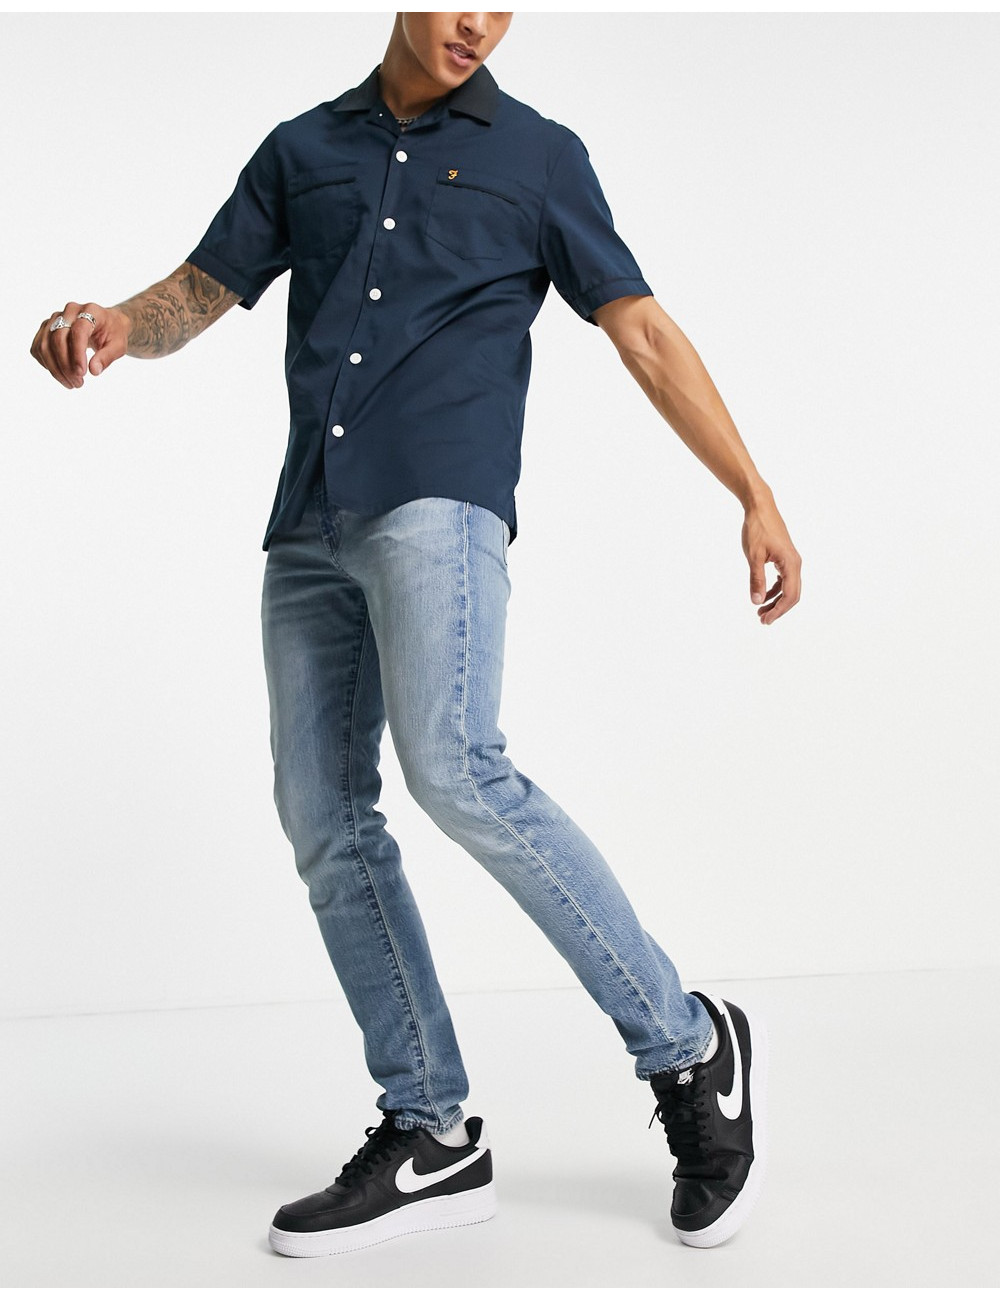 Levi's 510 skinny fit jeans...